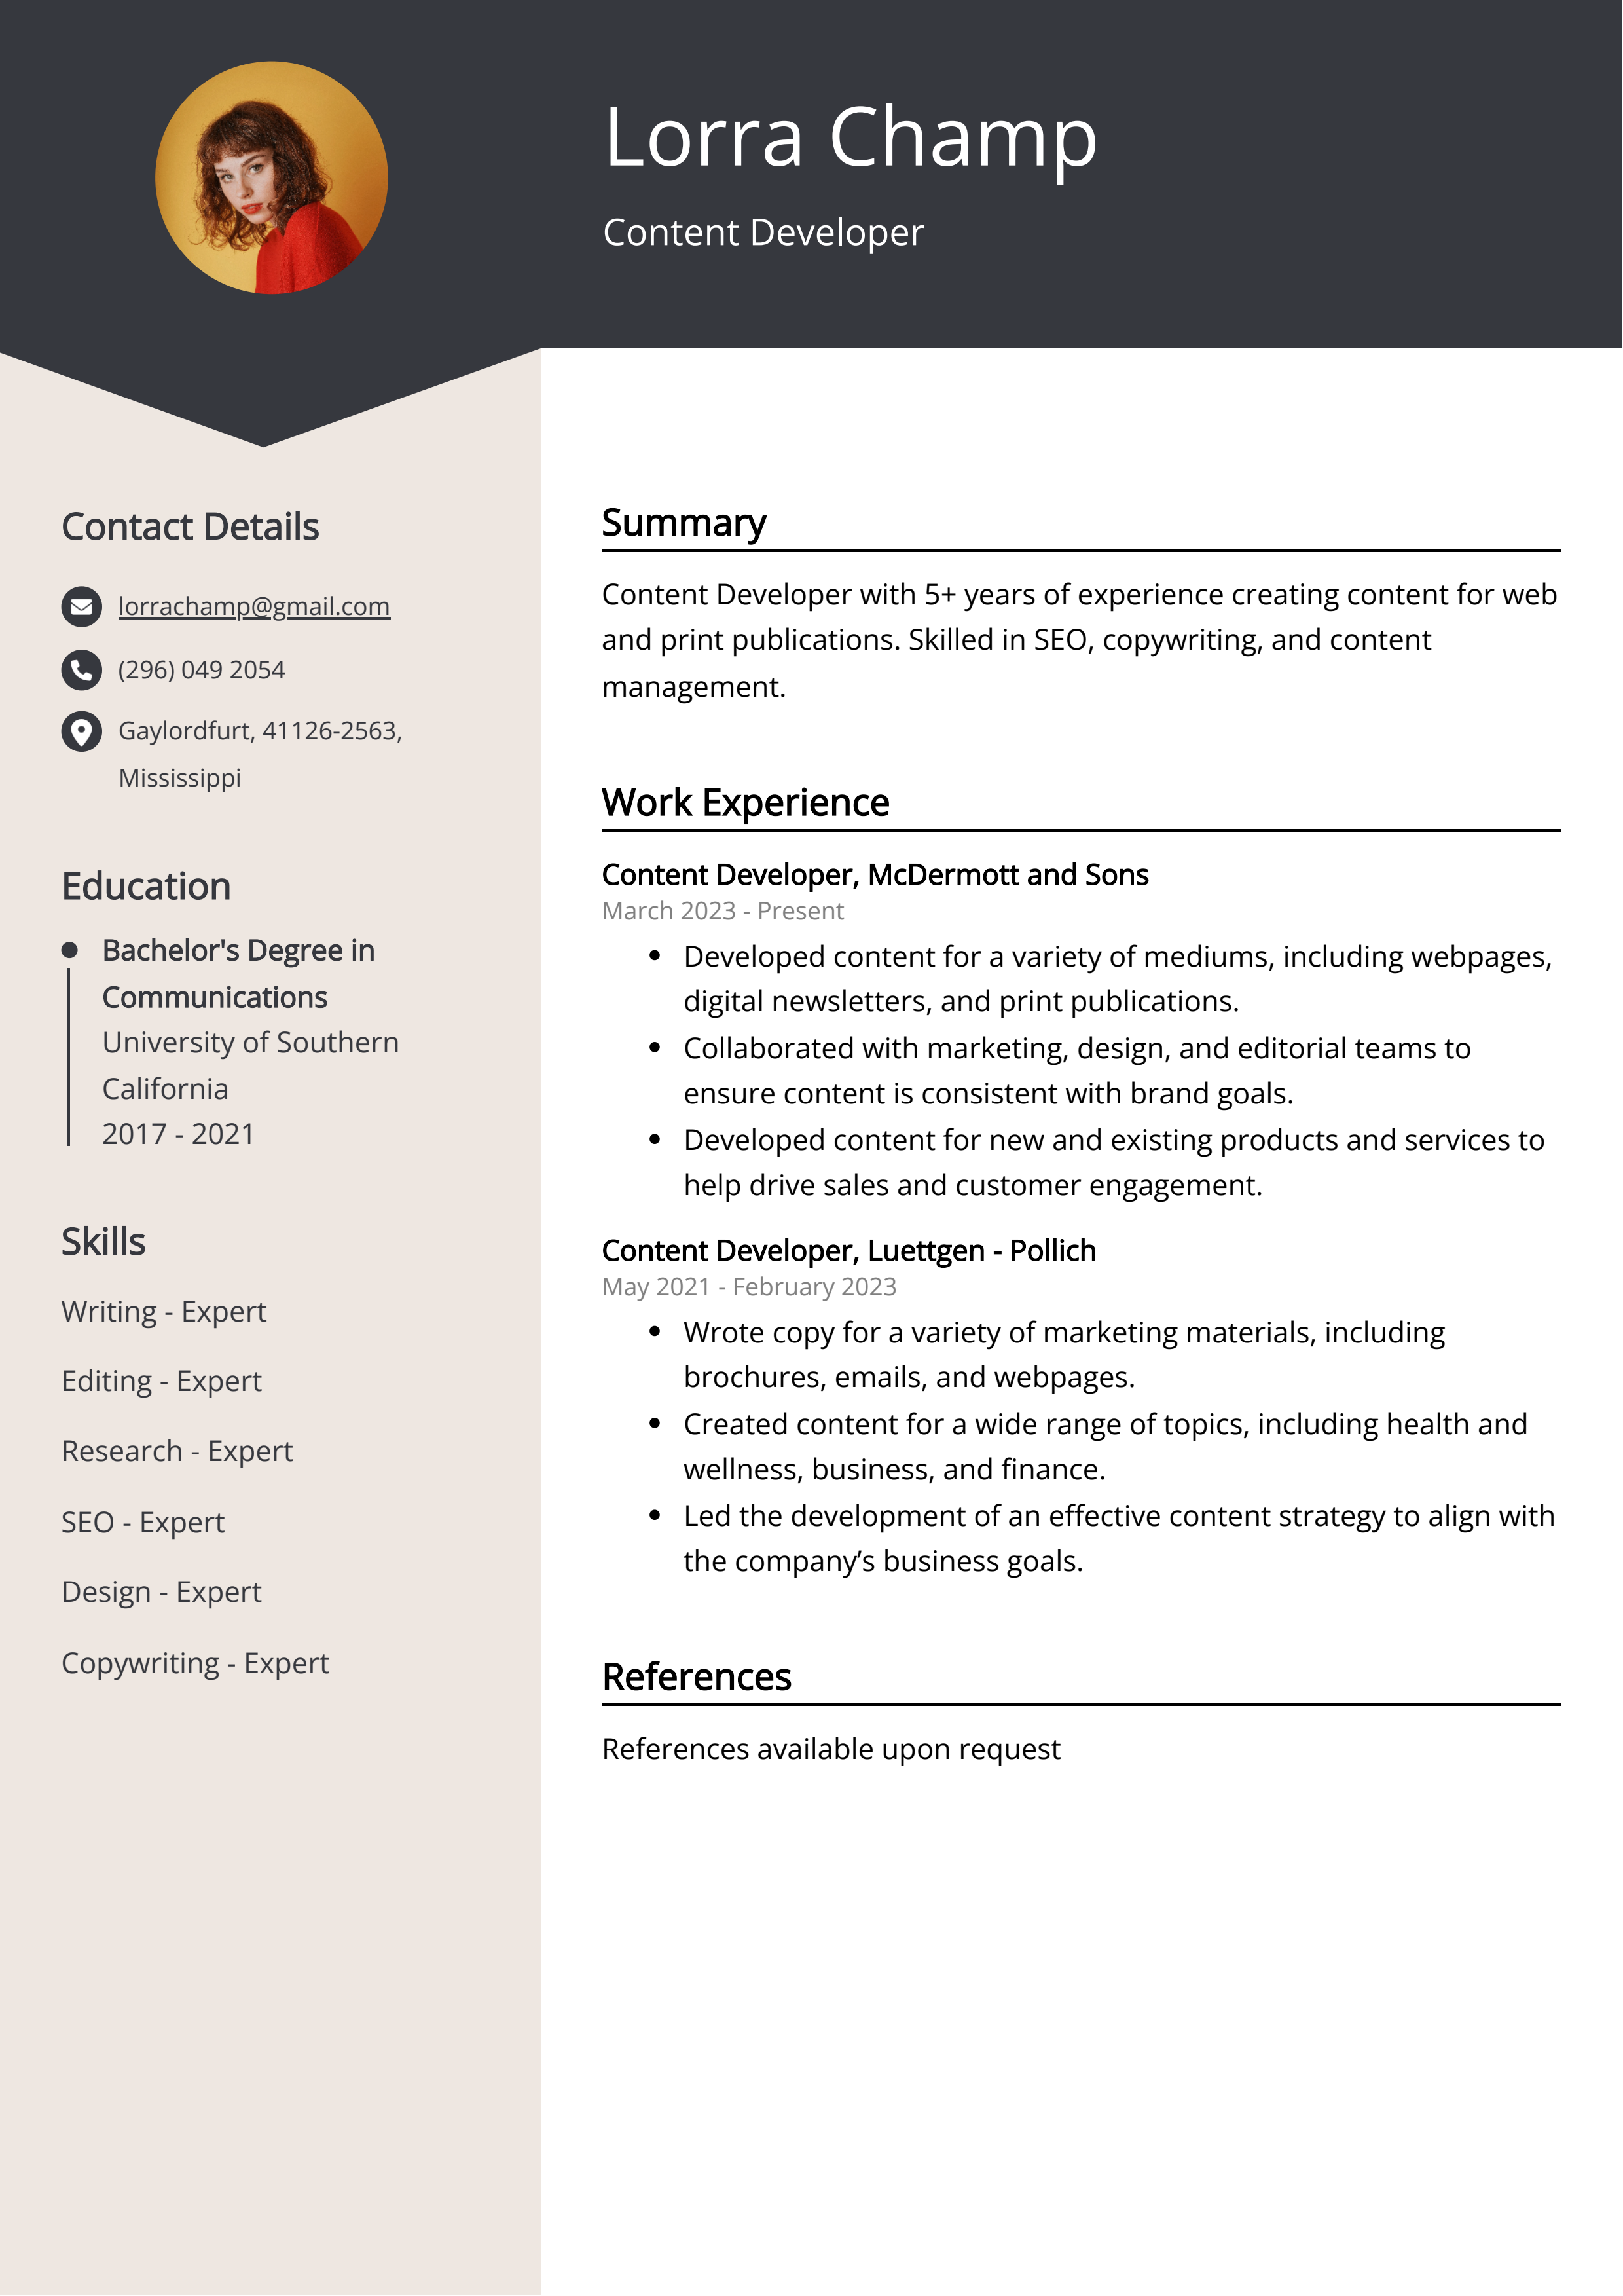 Content Developer CV Example